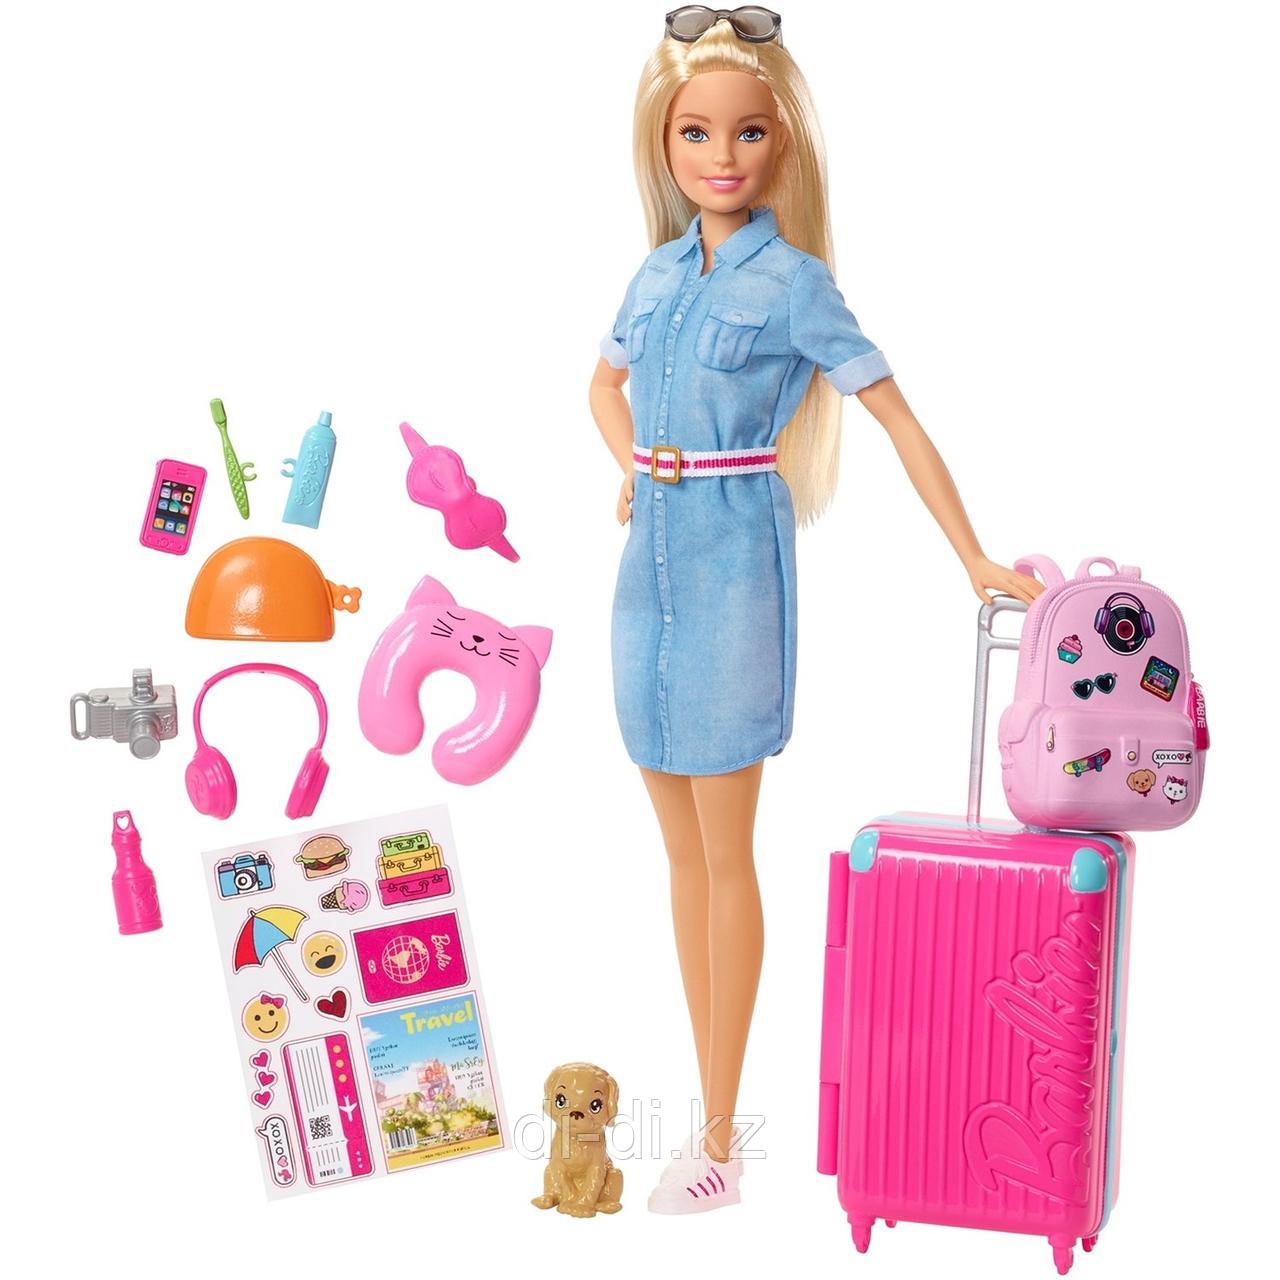 Mattel Barbie Барби "Путешествия" FWV25